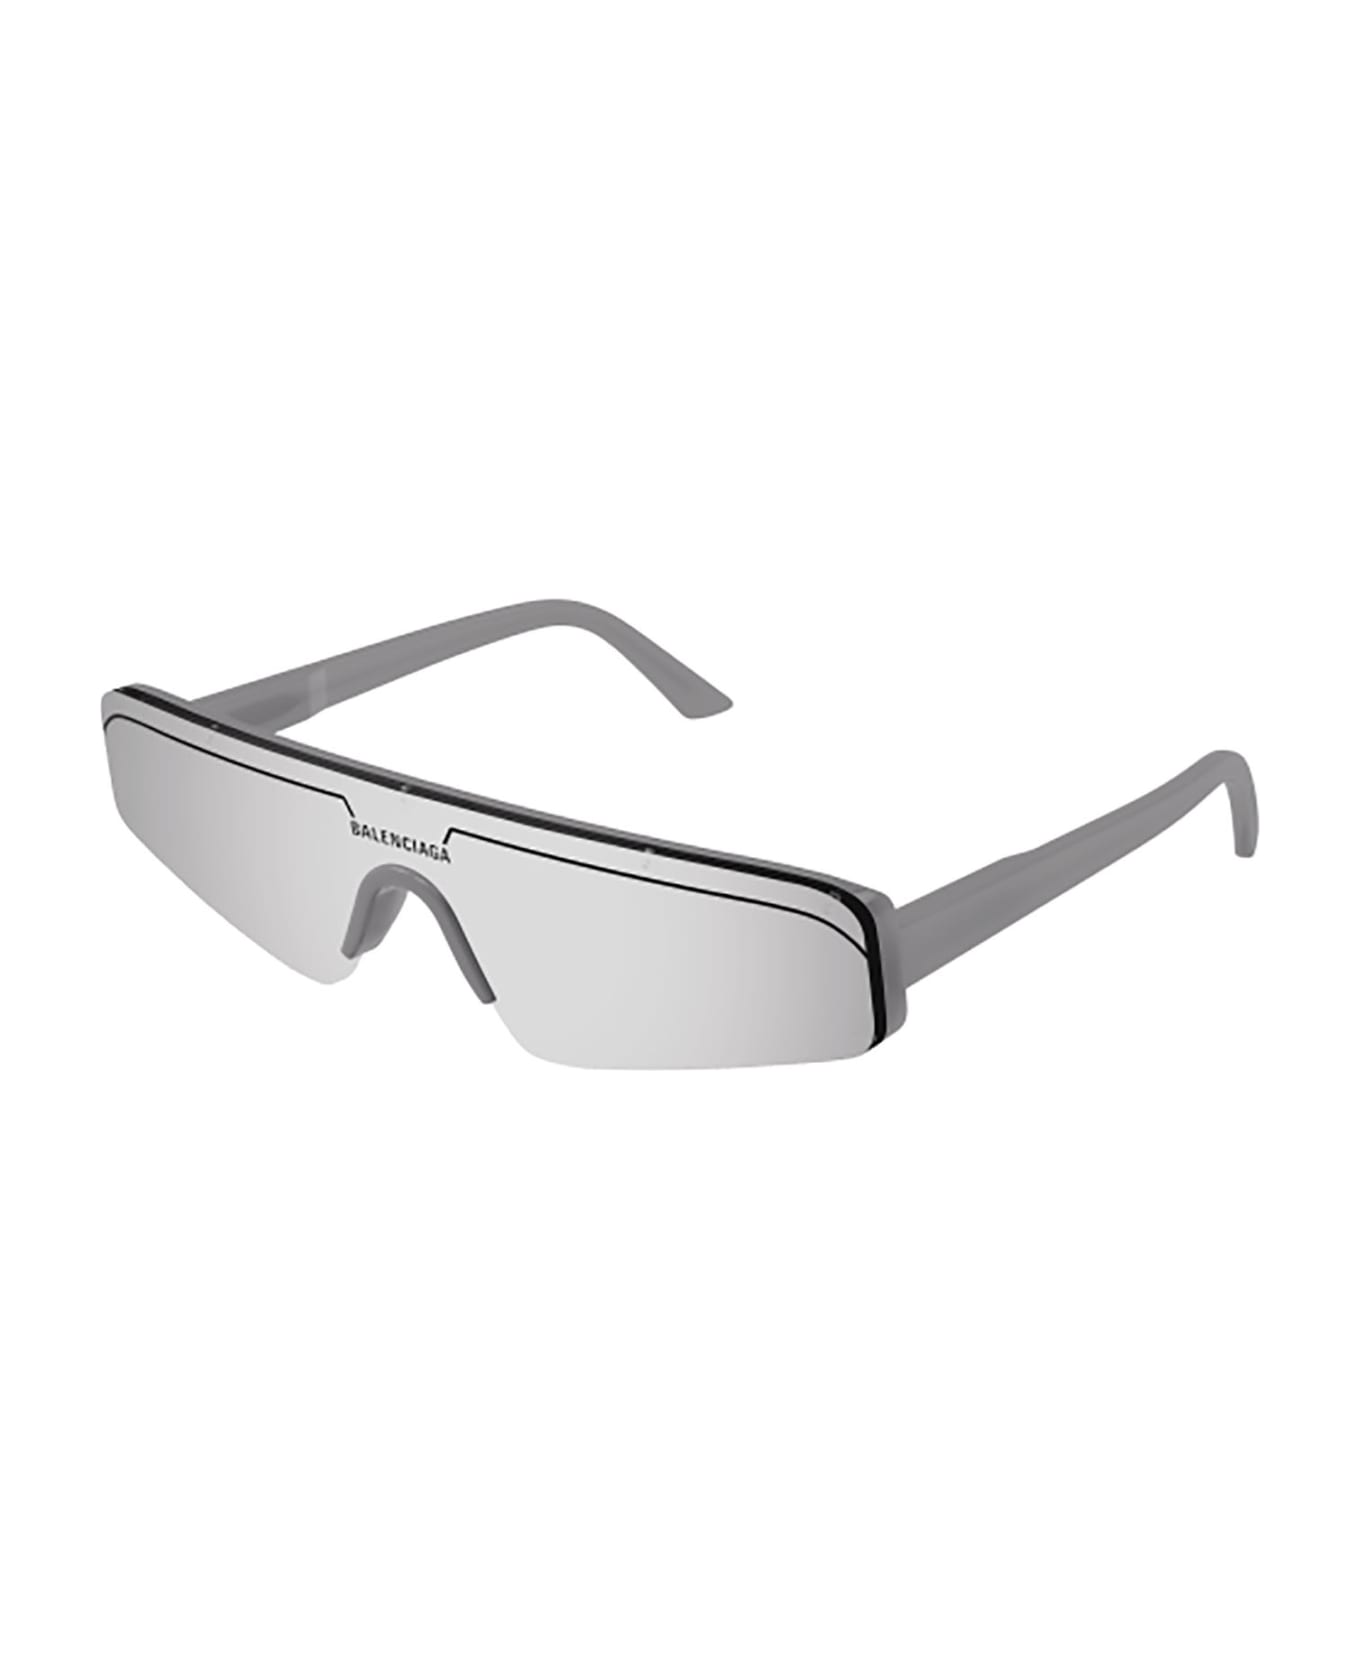 Balenciaga Eyewear Bb0003s Sunglasses - 011 grey grey silver